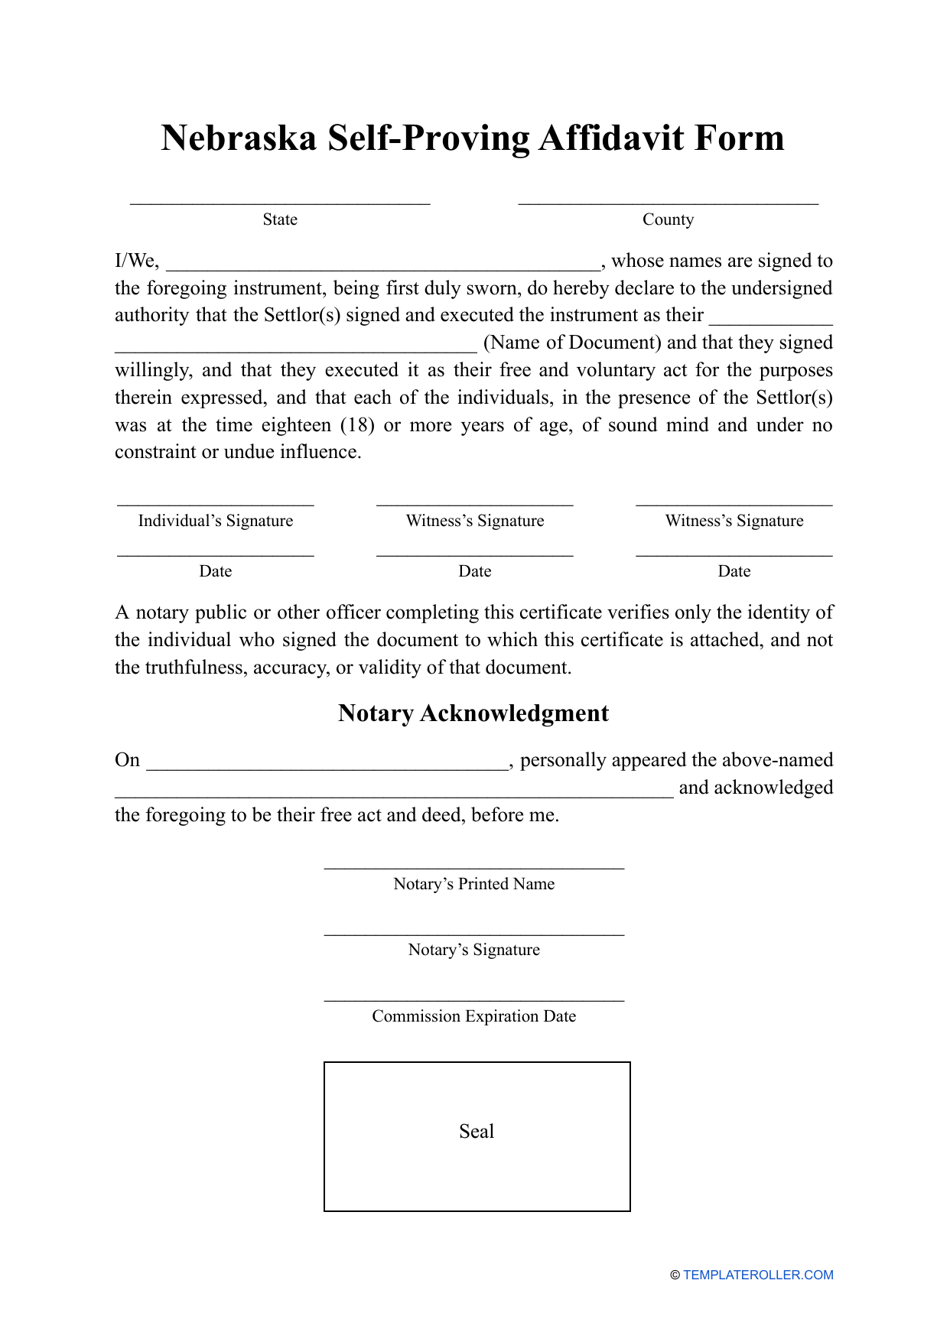 Self-proving Affidavit Form - Nebraska, Page 1